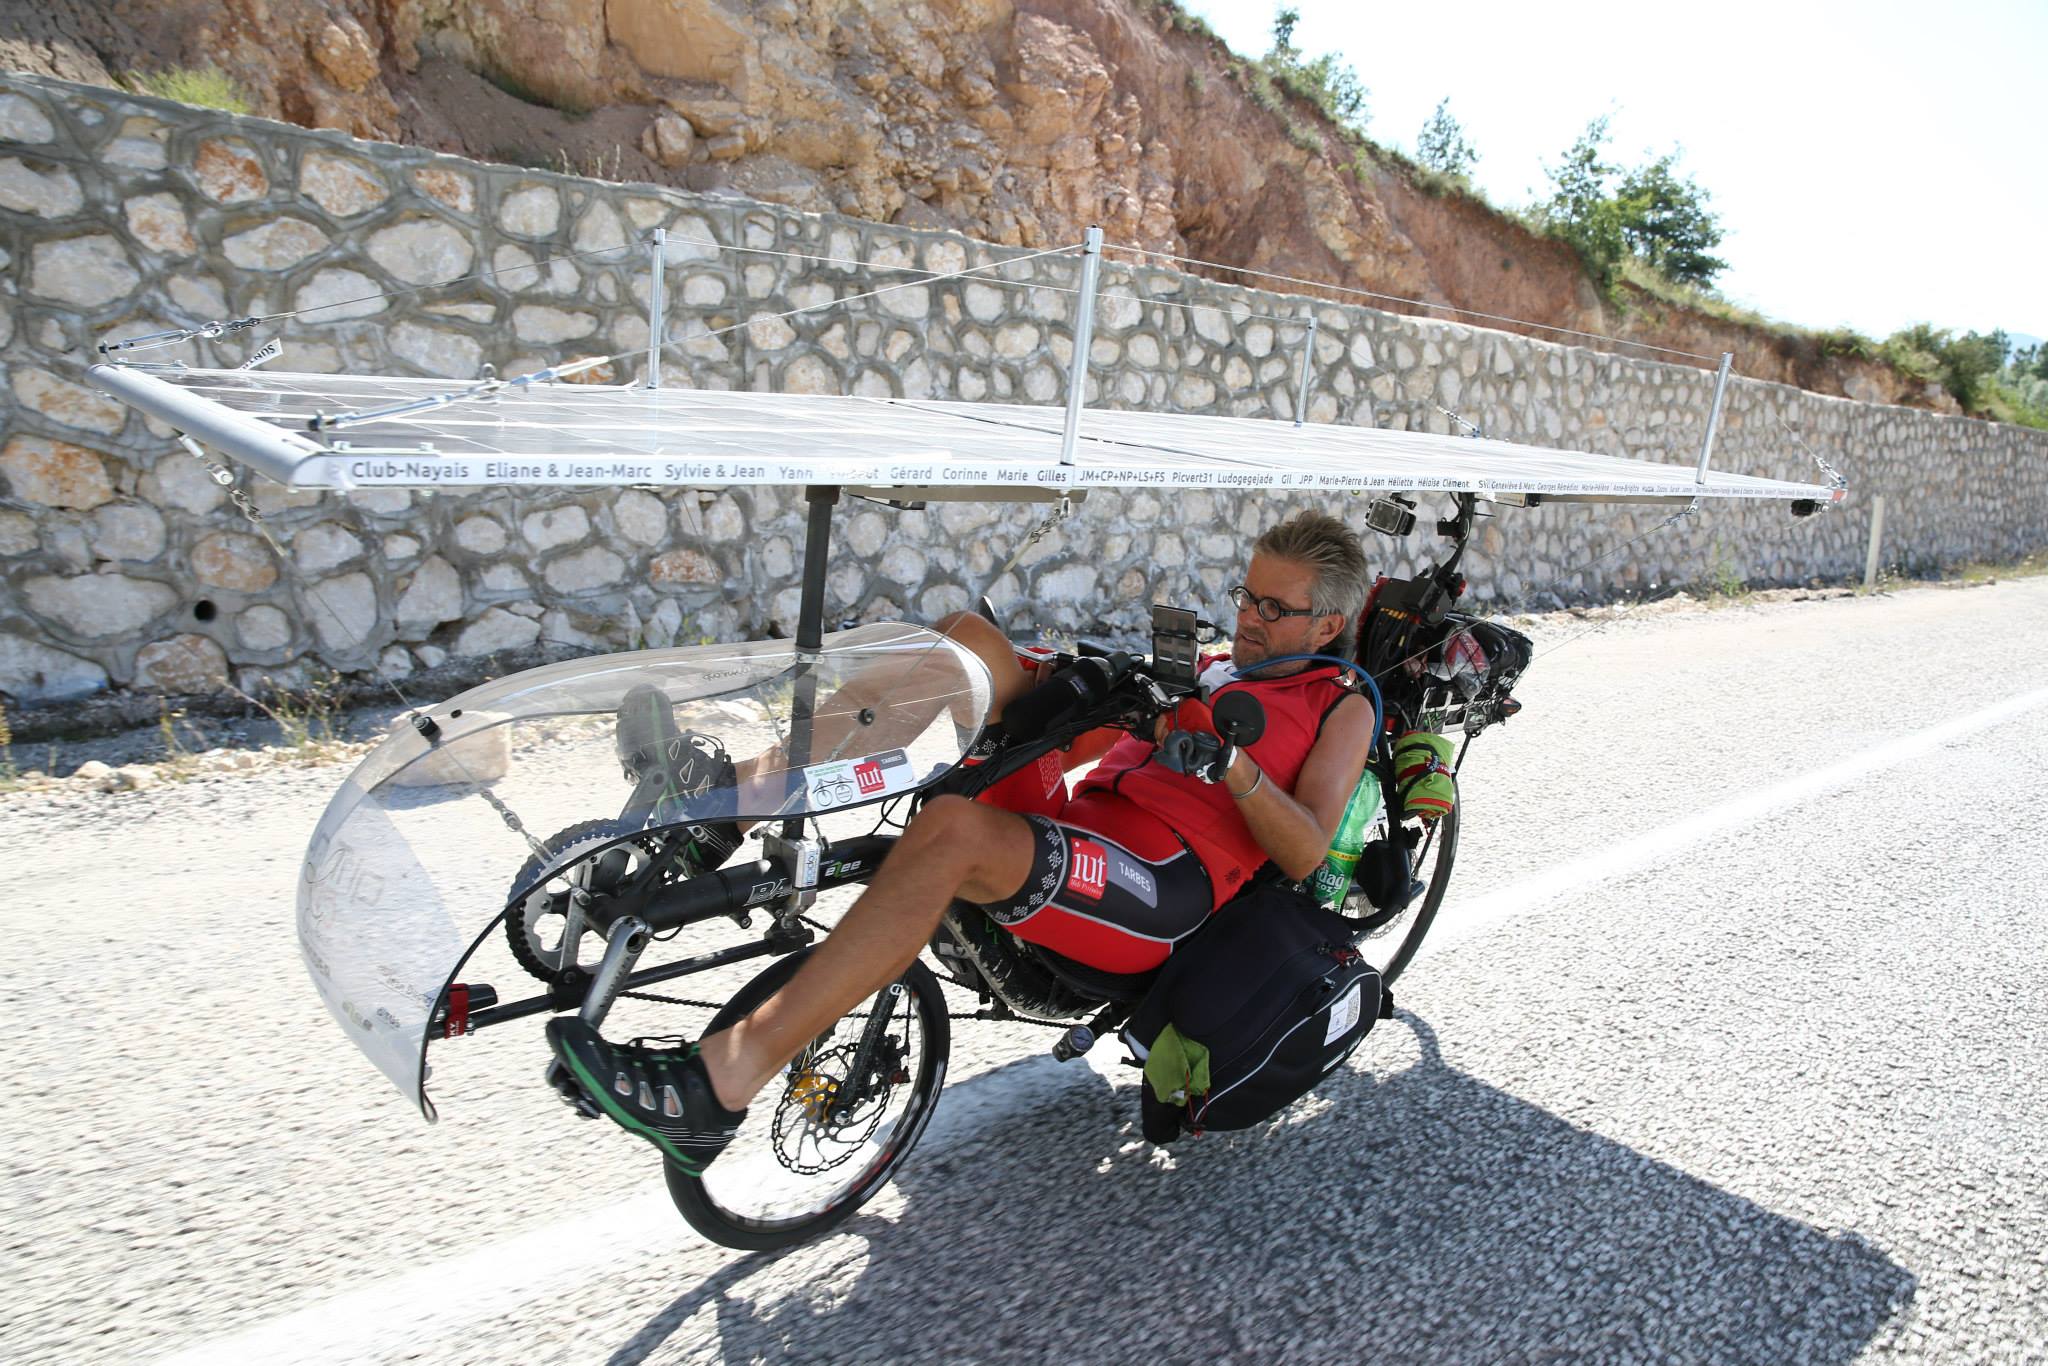 recumbent-bike-winning-the-Sun-Trip-race-of-solar-bikes.jpg